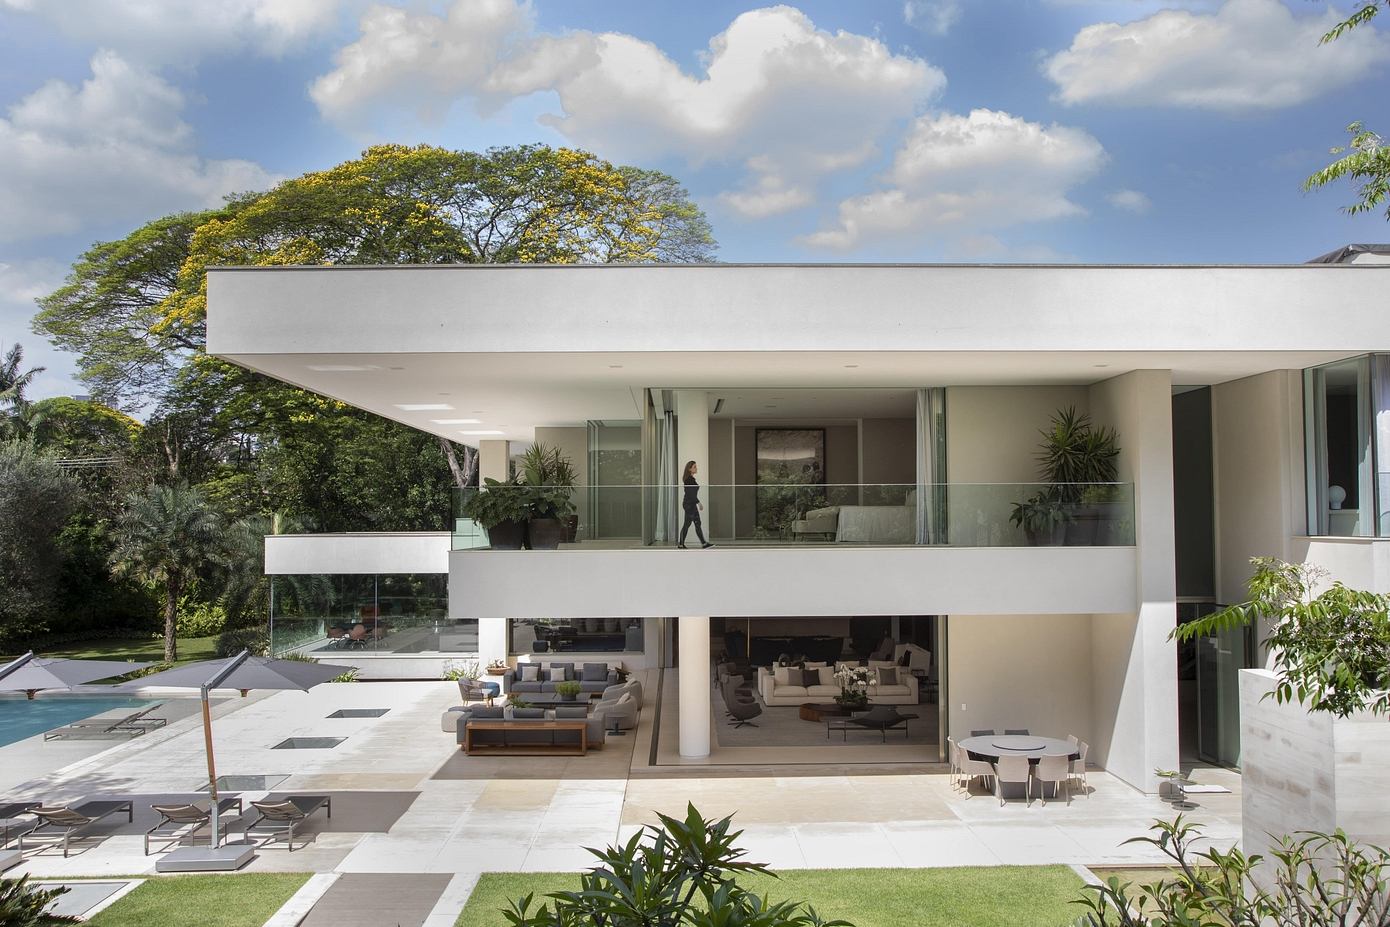 P13 Residence: Redefining Luxury with Minimalist Design